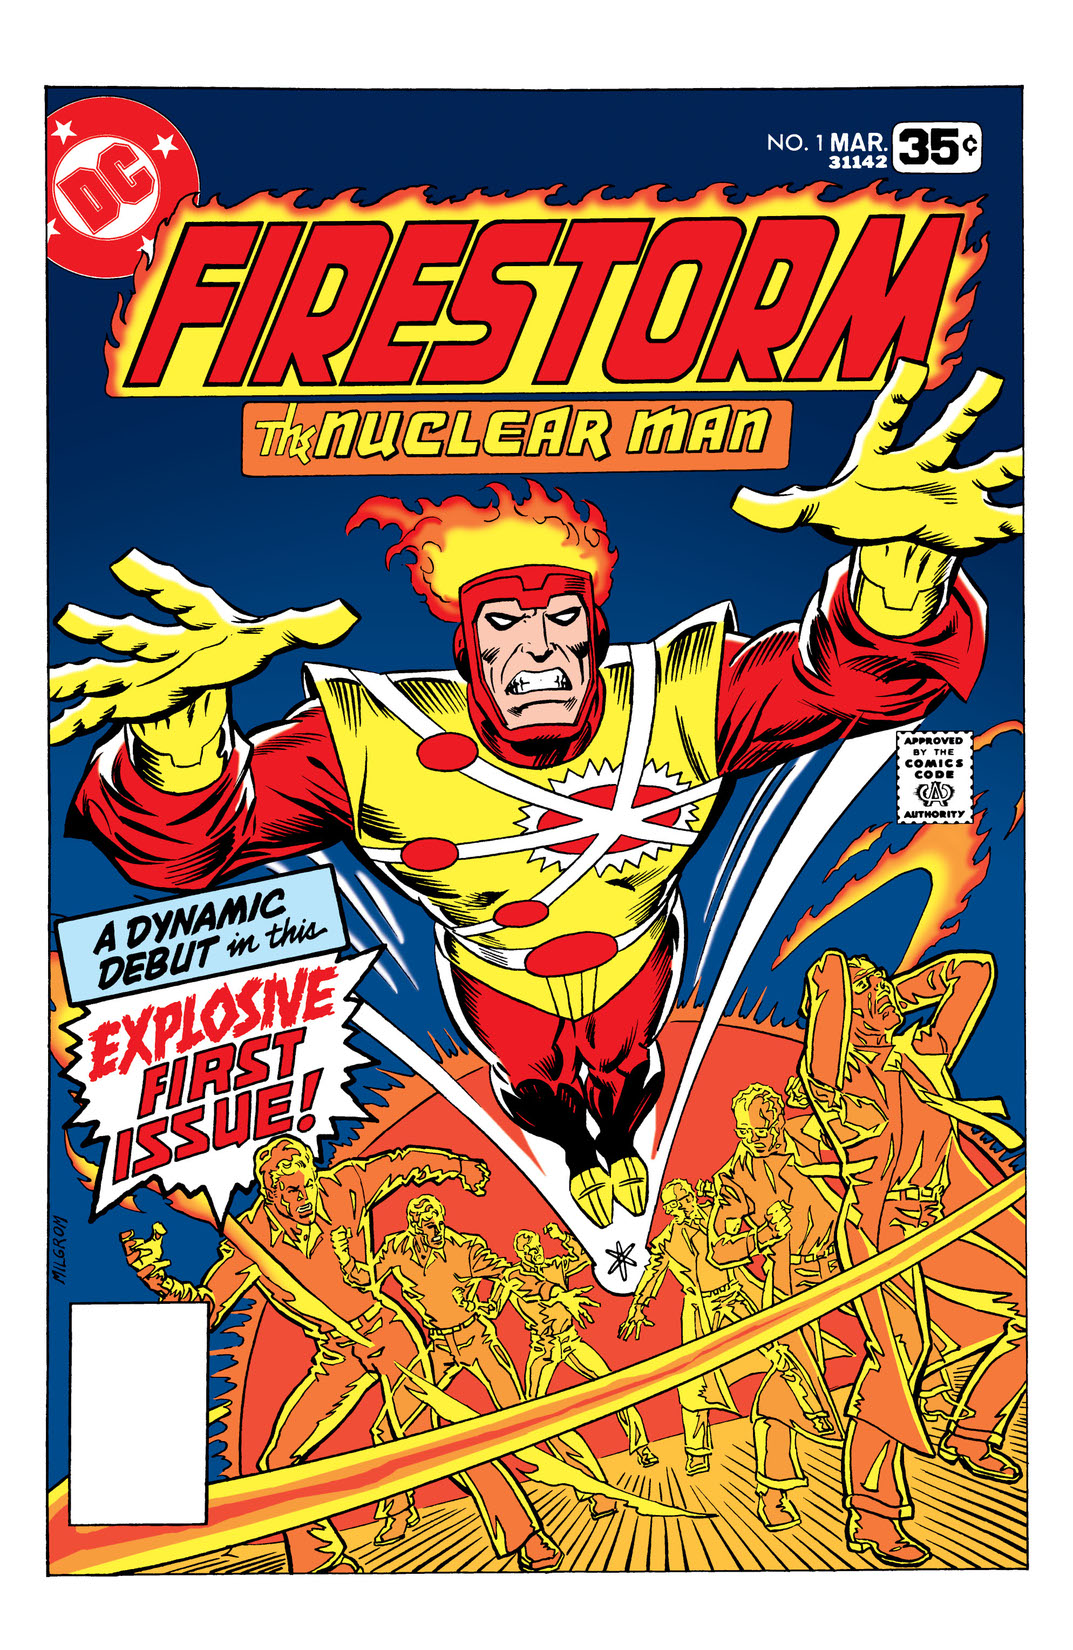 Firestorm #1 preview images